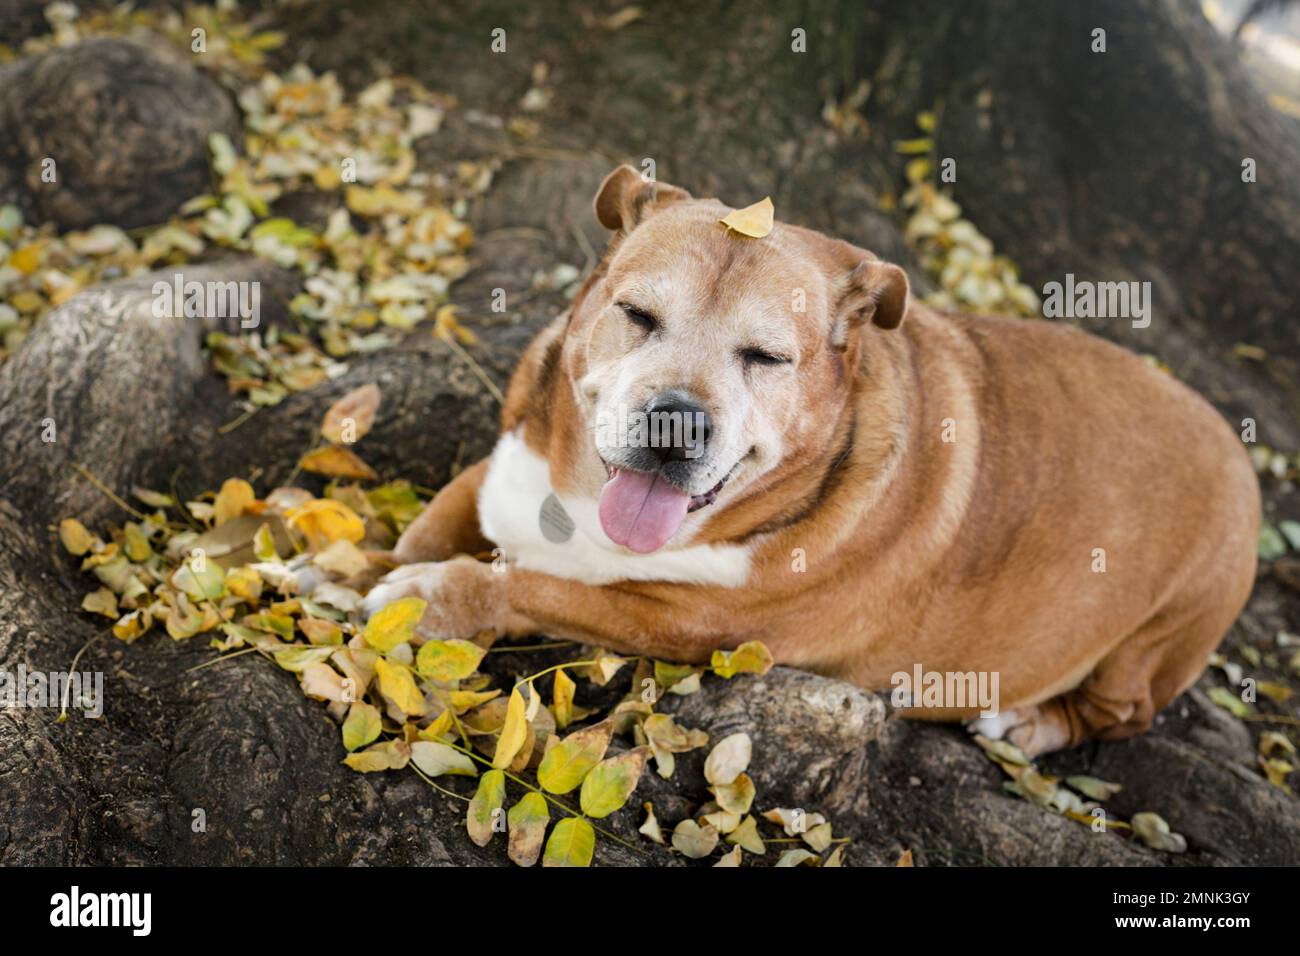 Senior dog resting in fall leaves Stock Photo